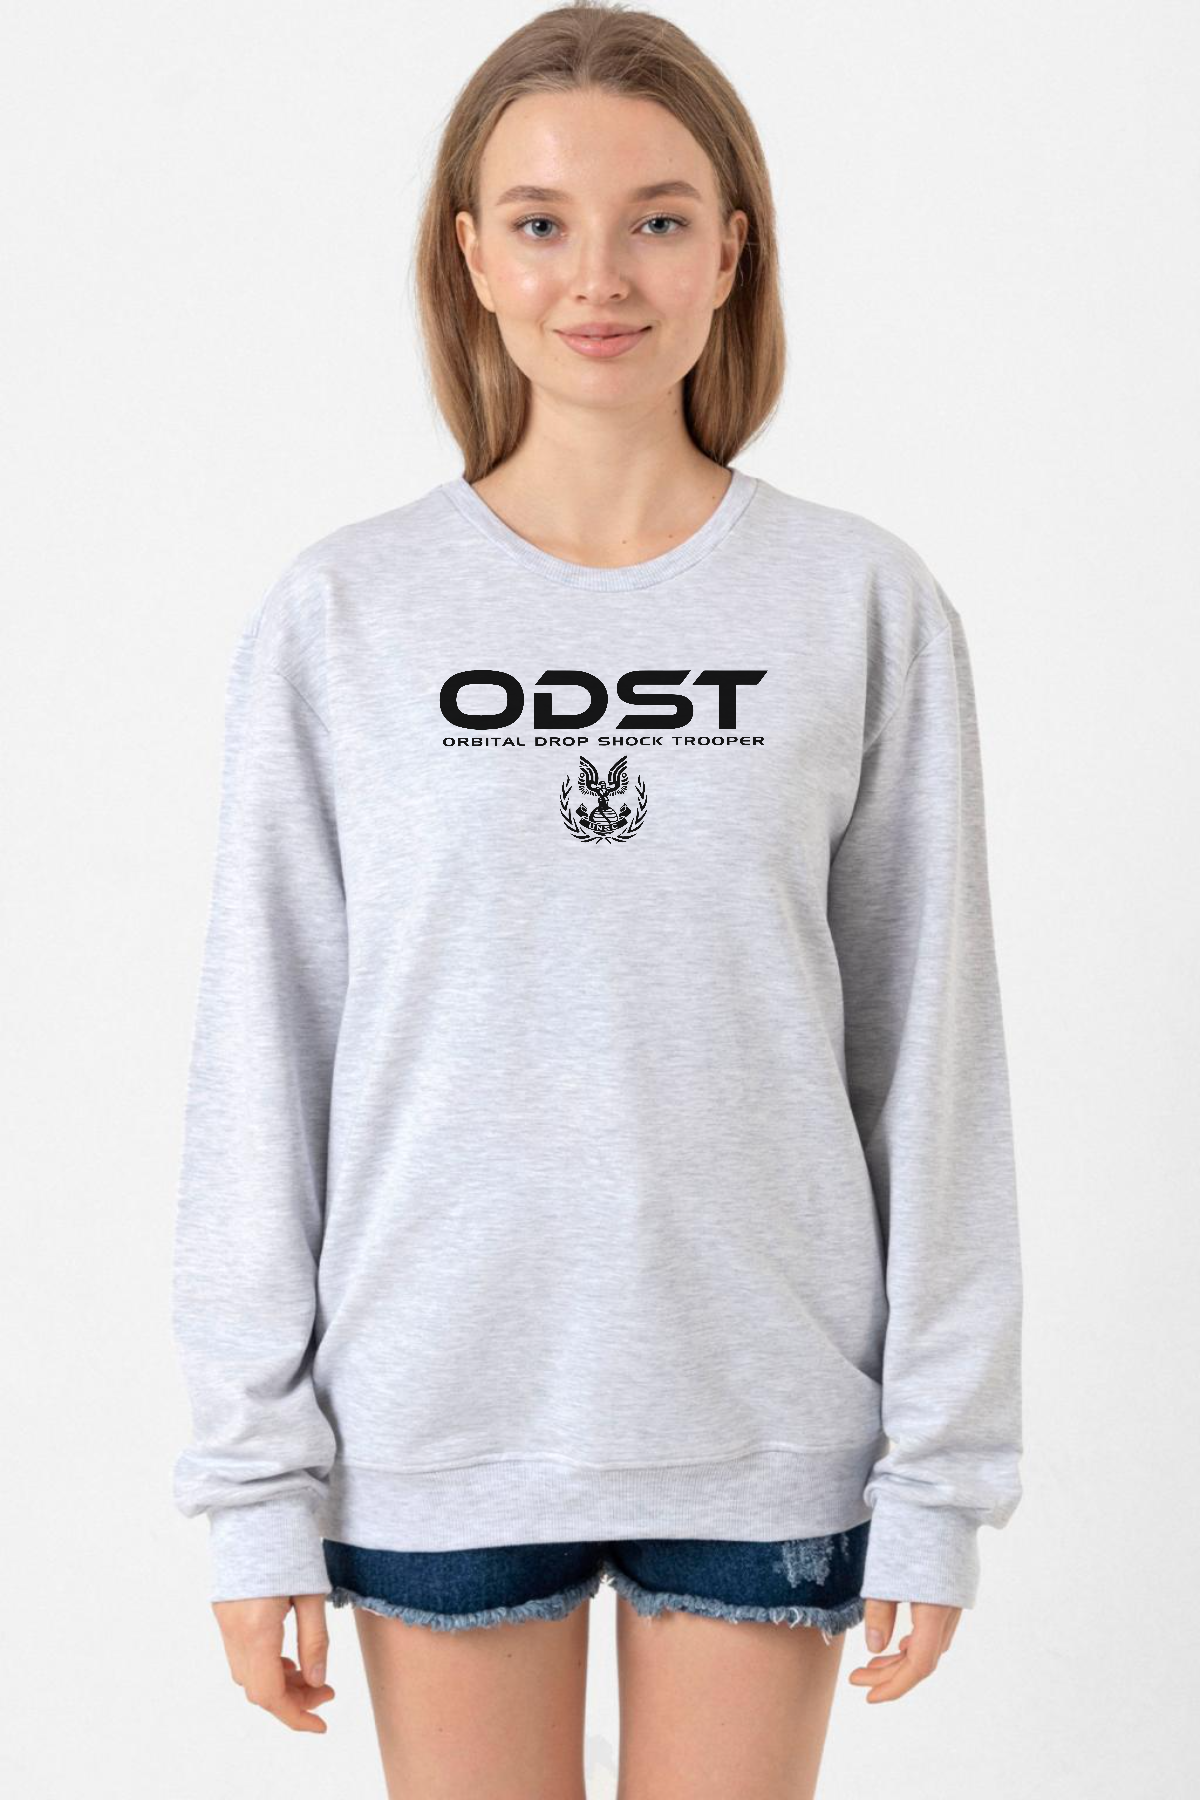 Halo Odst Orbital Drop Shock Trooper Grimelanj Kadın 2ip Sweatshirt